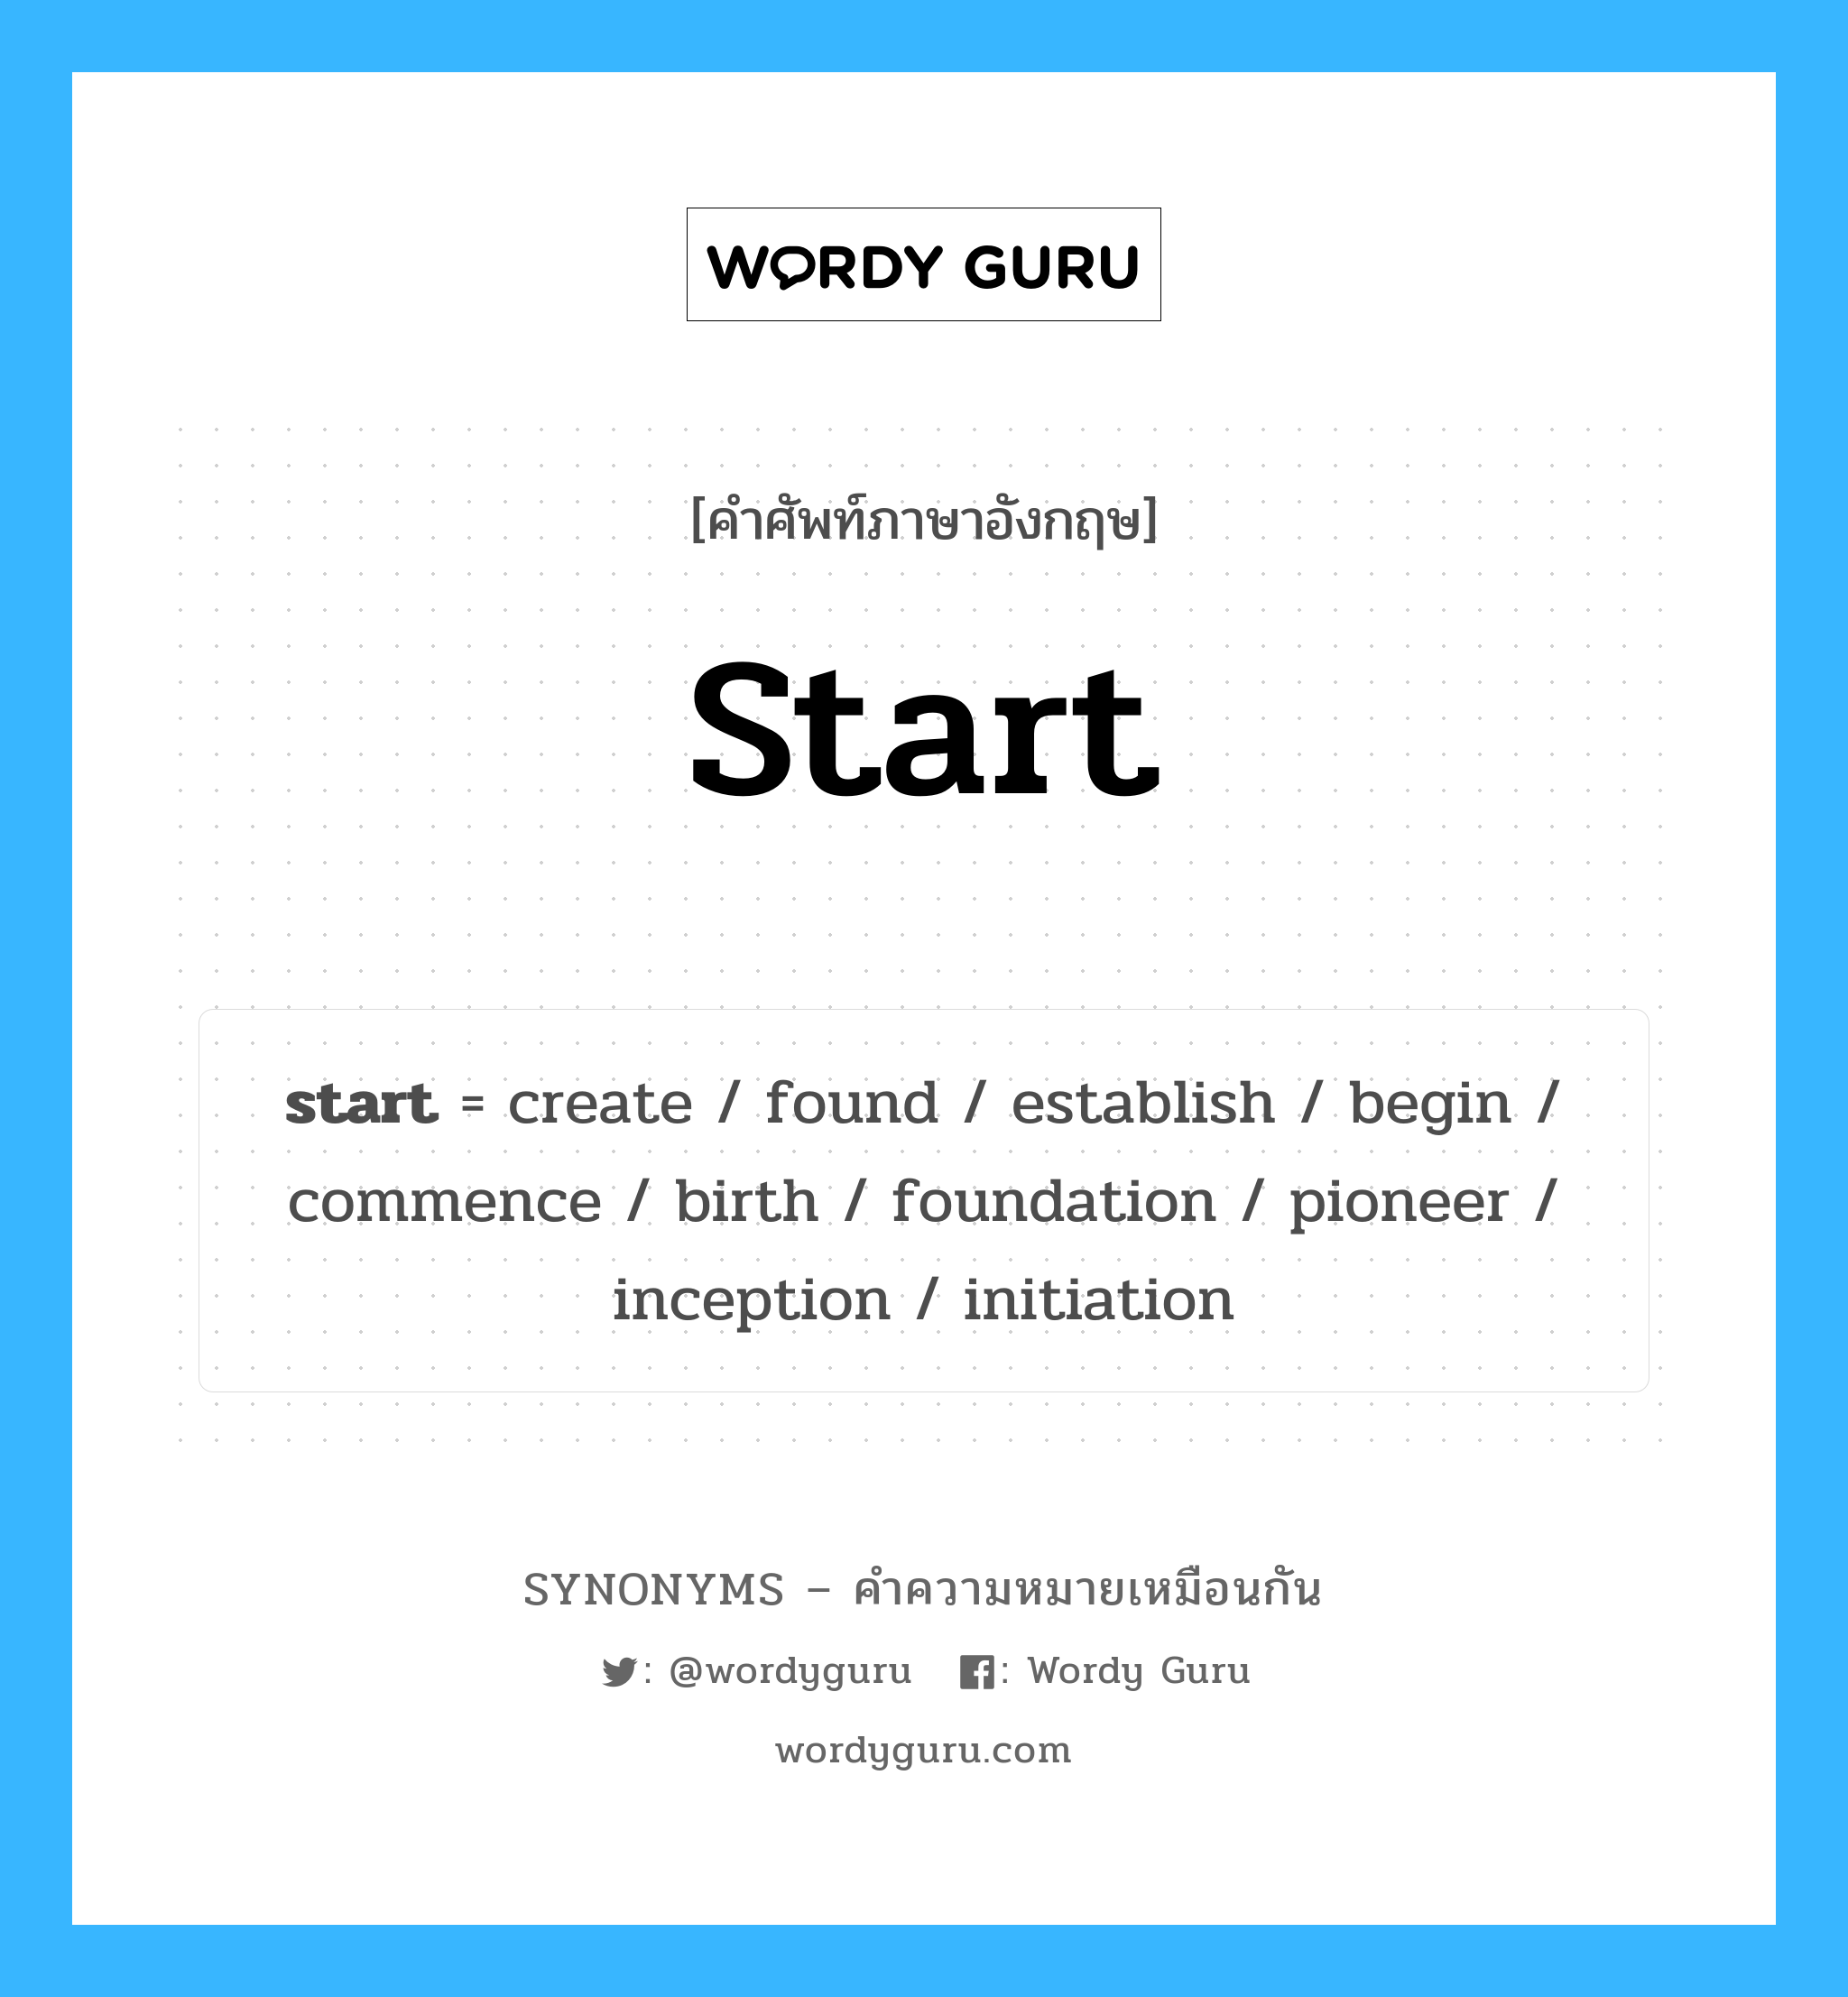 commence เป็นหนึ่งใน begin และมีคำอื่น ๆ อีกดังนี้, คำศัพท์ภาษาอังกฤษ commence ความหมายคล้ายกันกับ start แปลว่า เริ่ม หมวด start